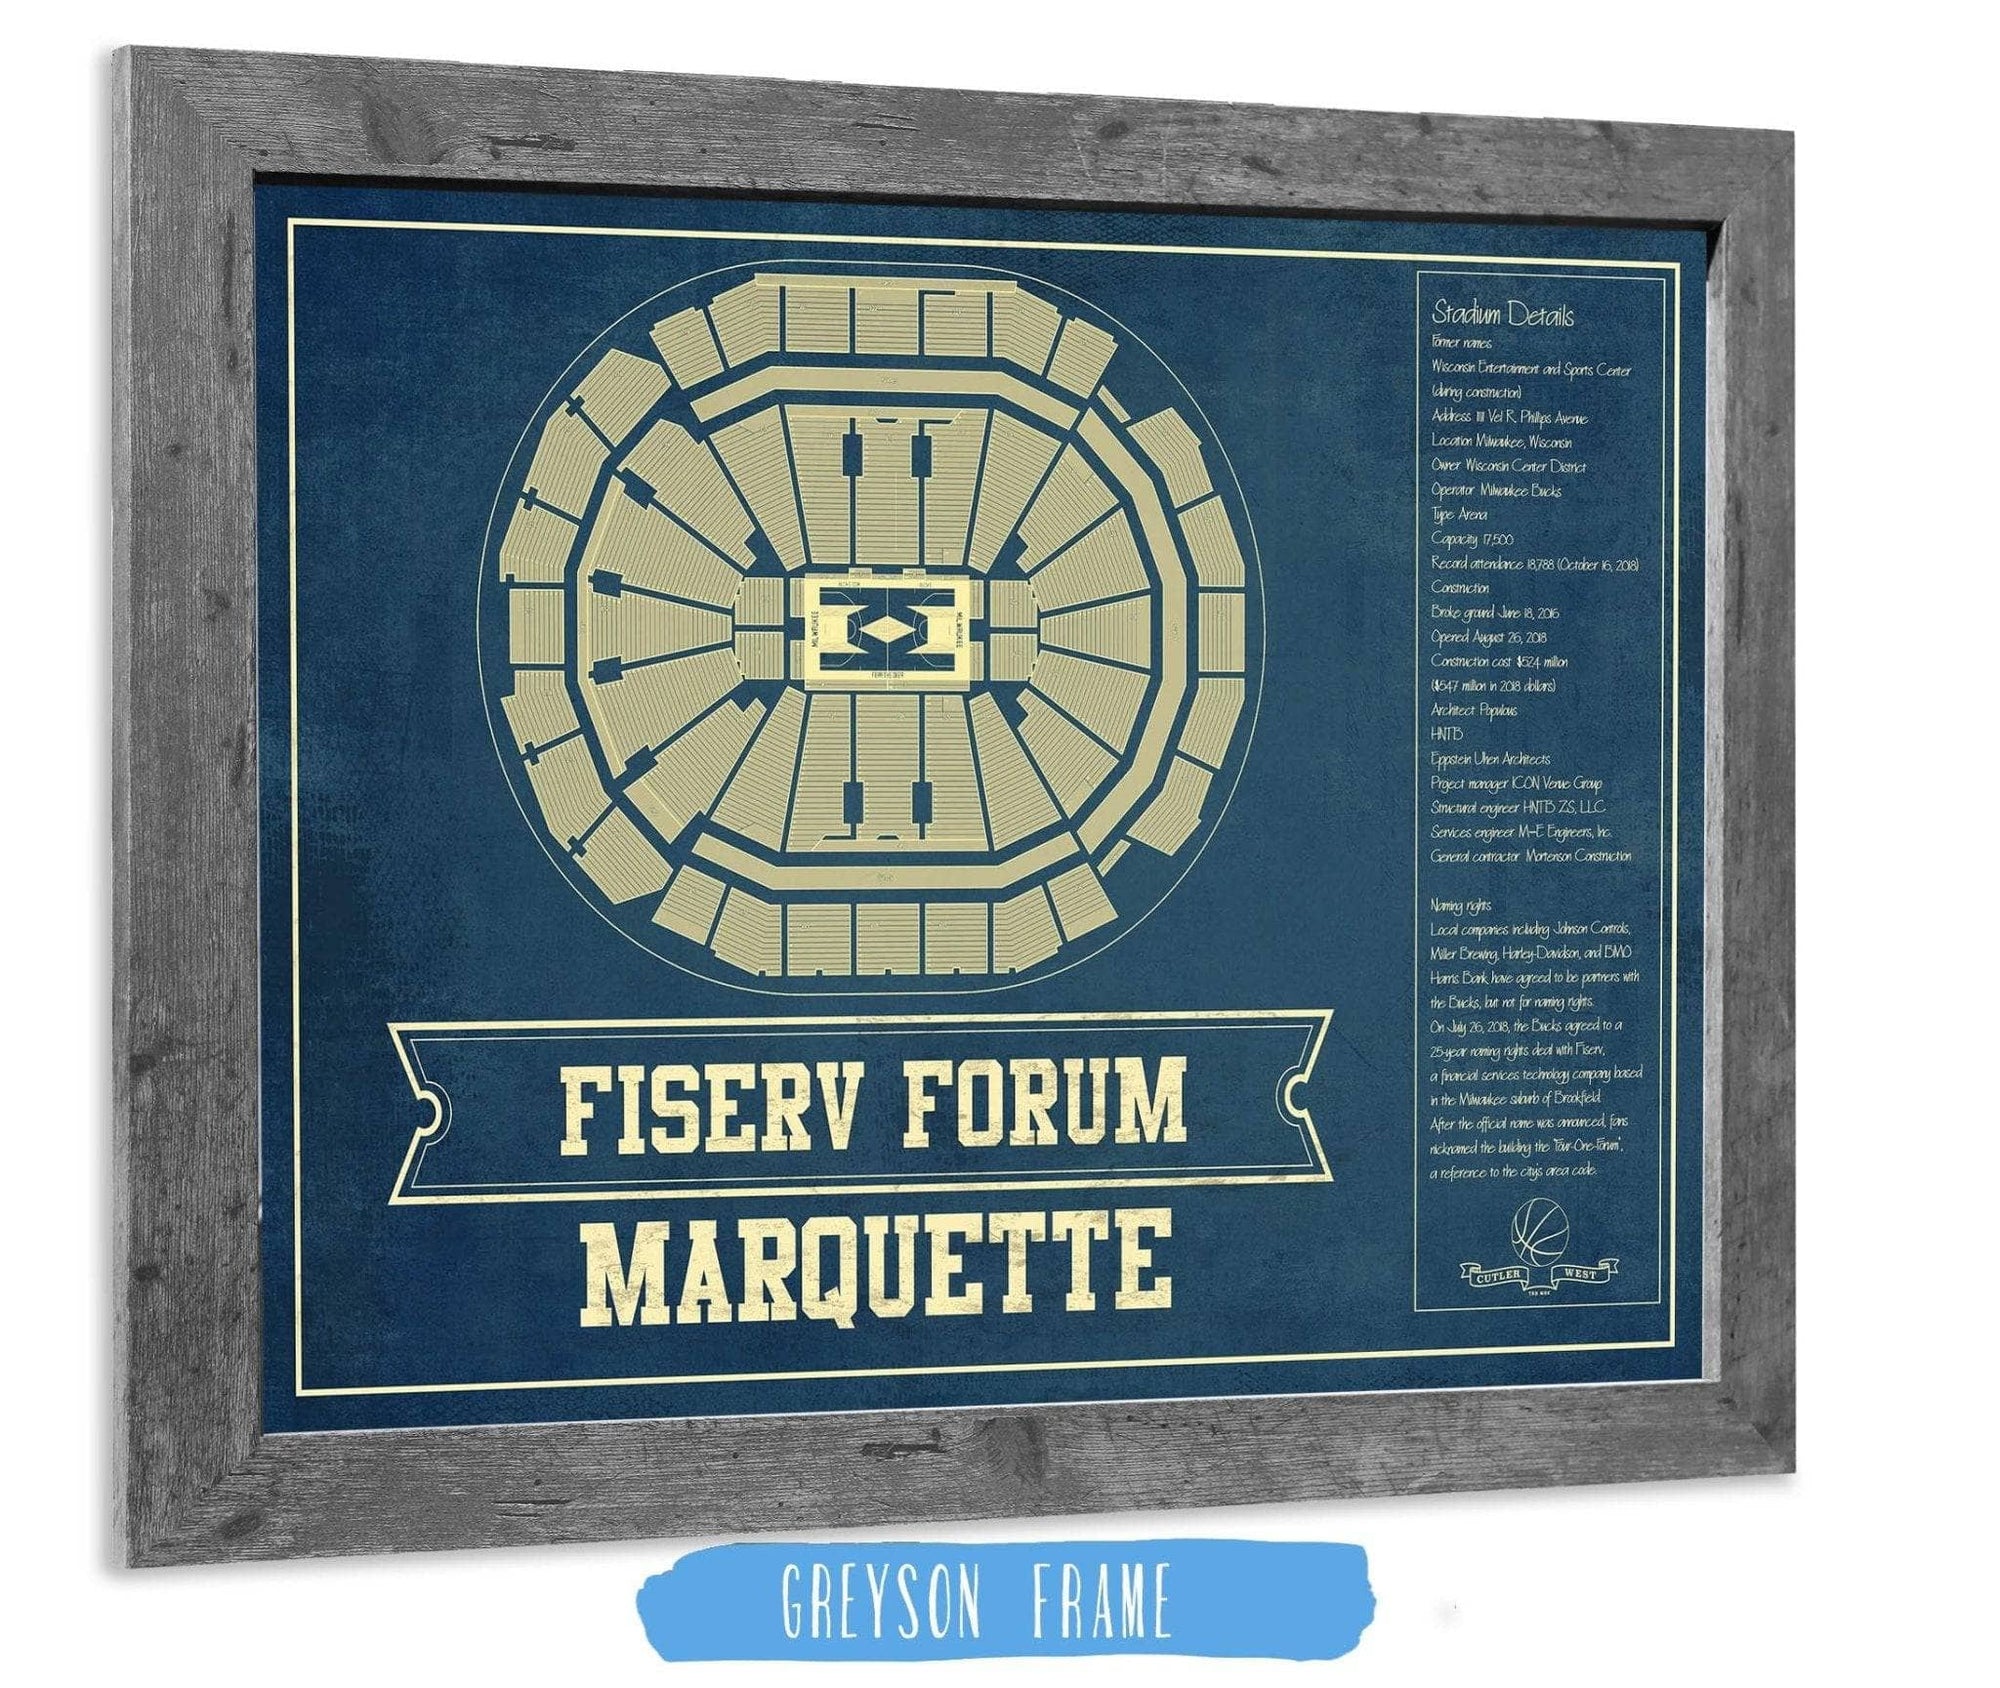 Cutler West Basketball Collection 14" x 11" / Greyson Frame Fiserv Forum Marquette Golden Eagles NCAA Vintage Art Print 93335023783961